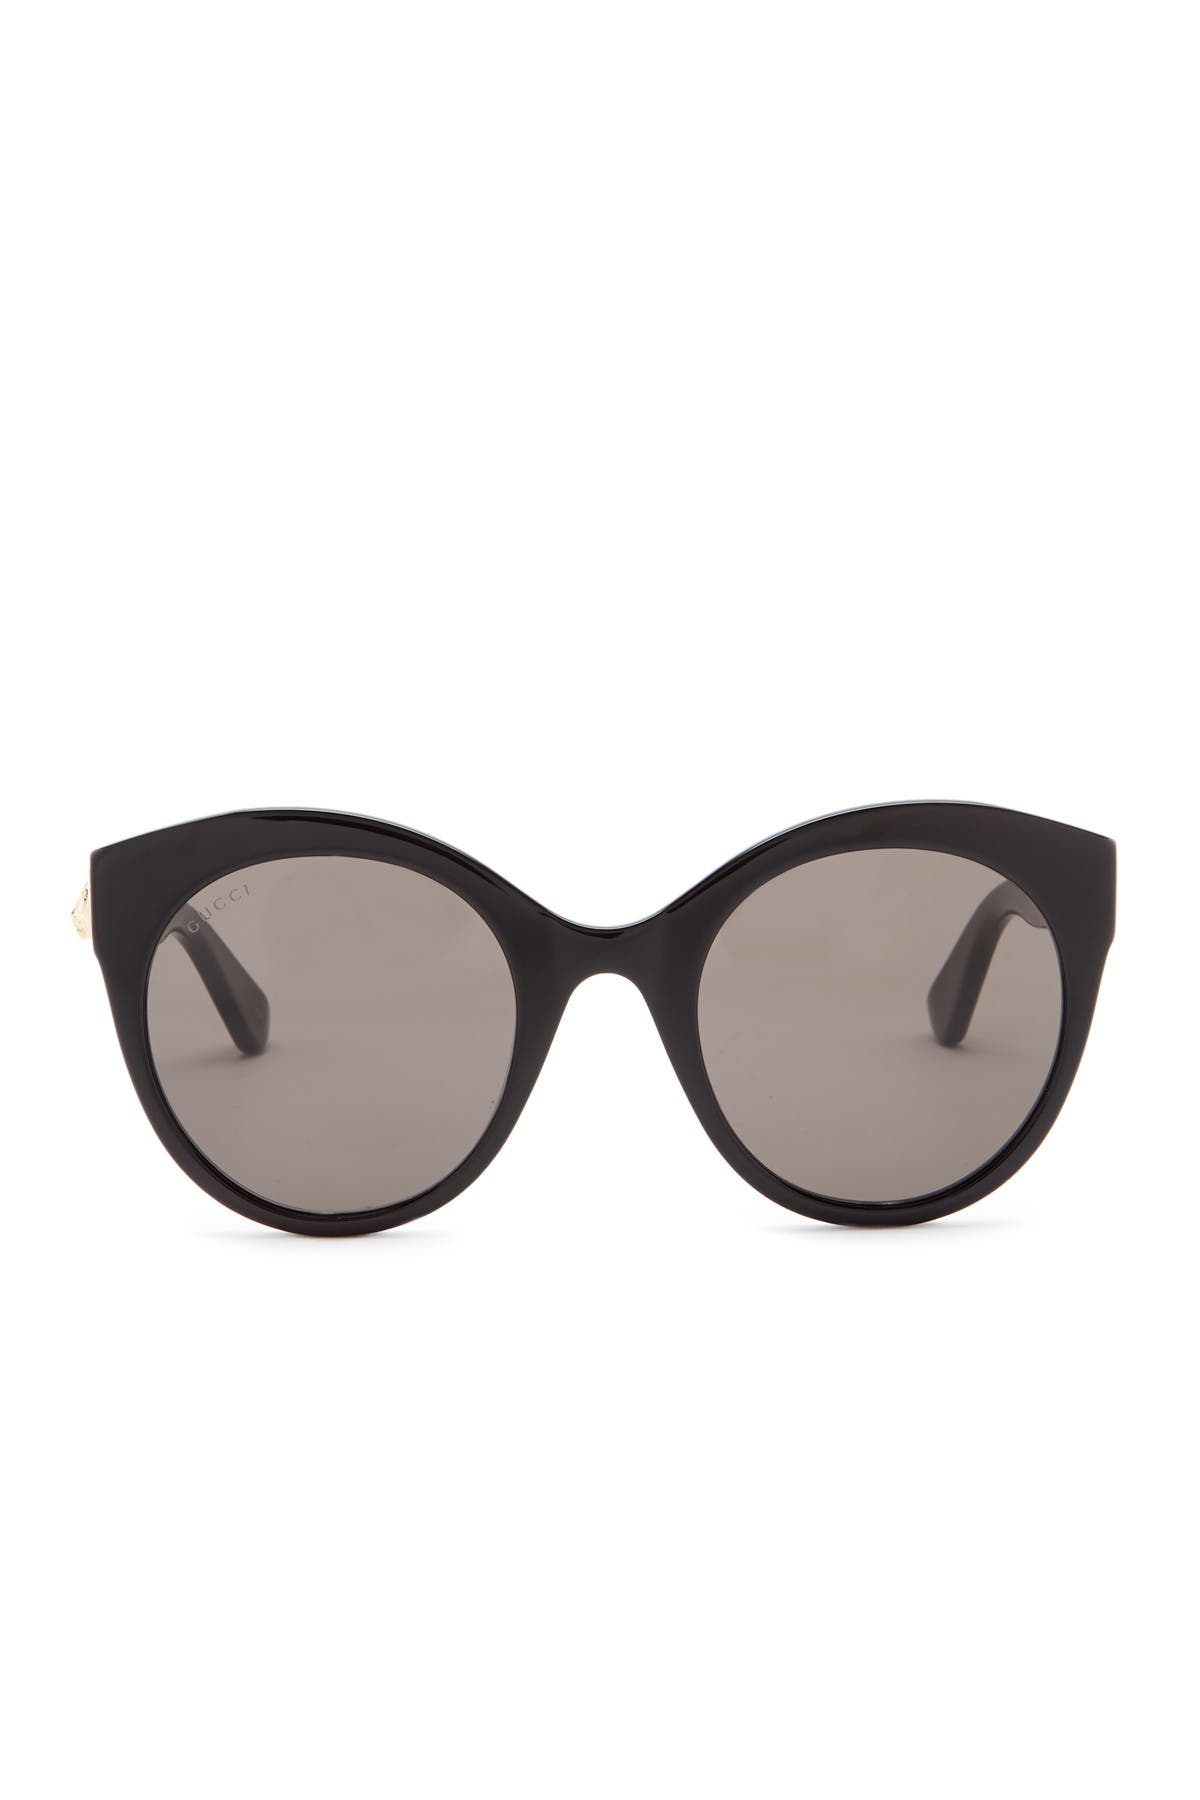 GUCCI | 52mm Round Cat Eye Sunglasses 